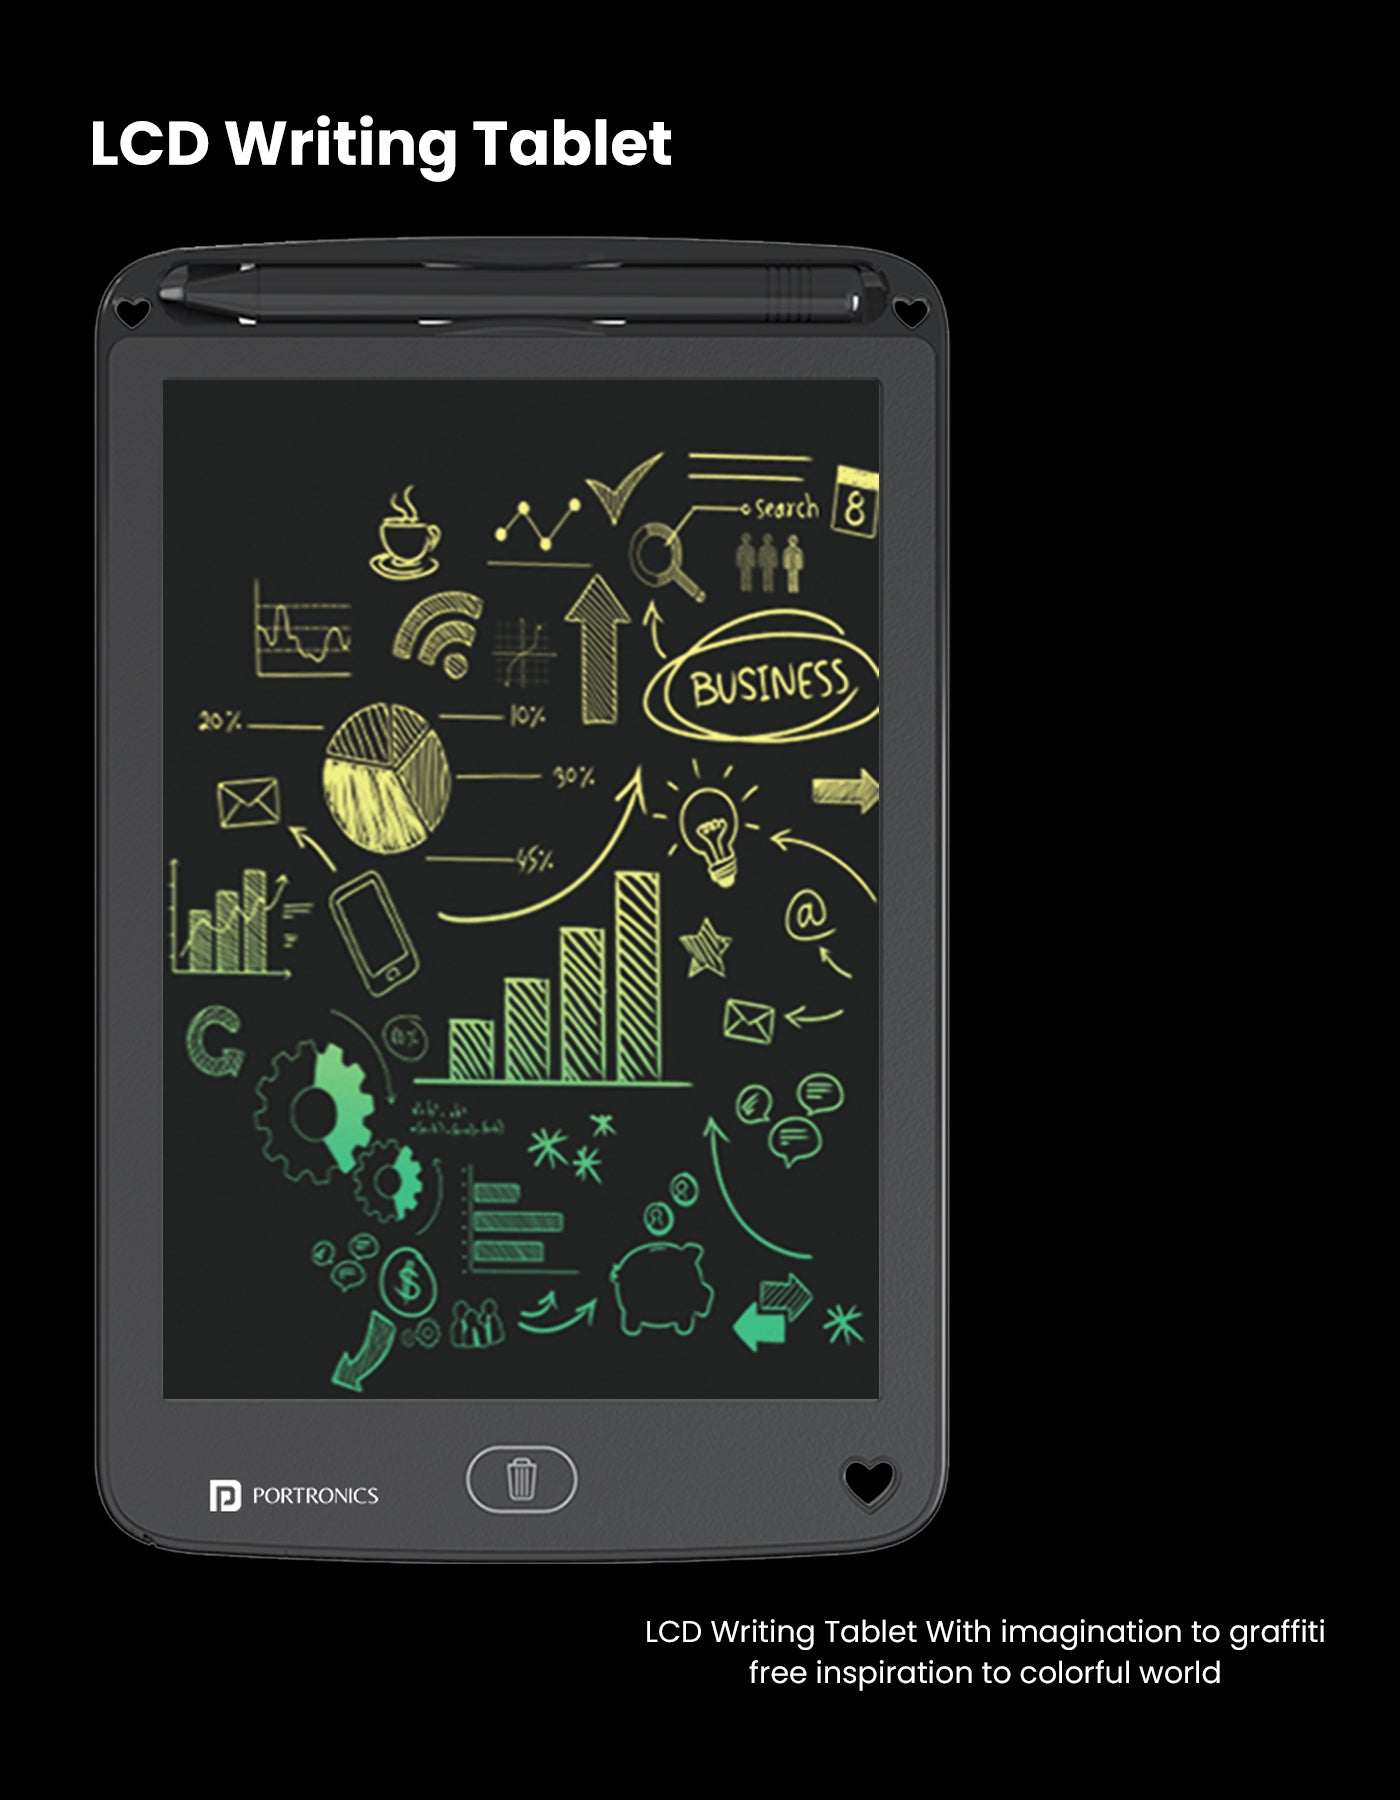 Ruffpad 12M: Digital Re-Writable LCD writing tablet